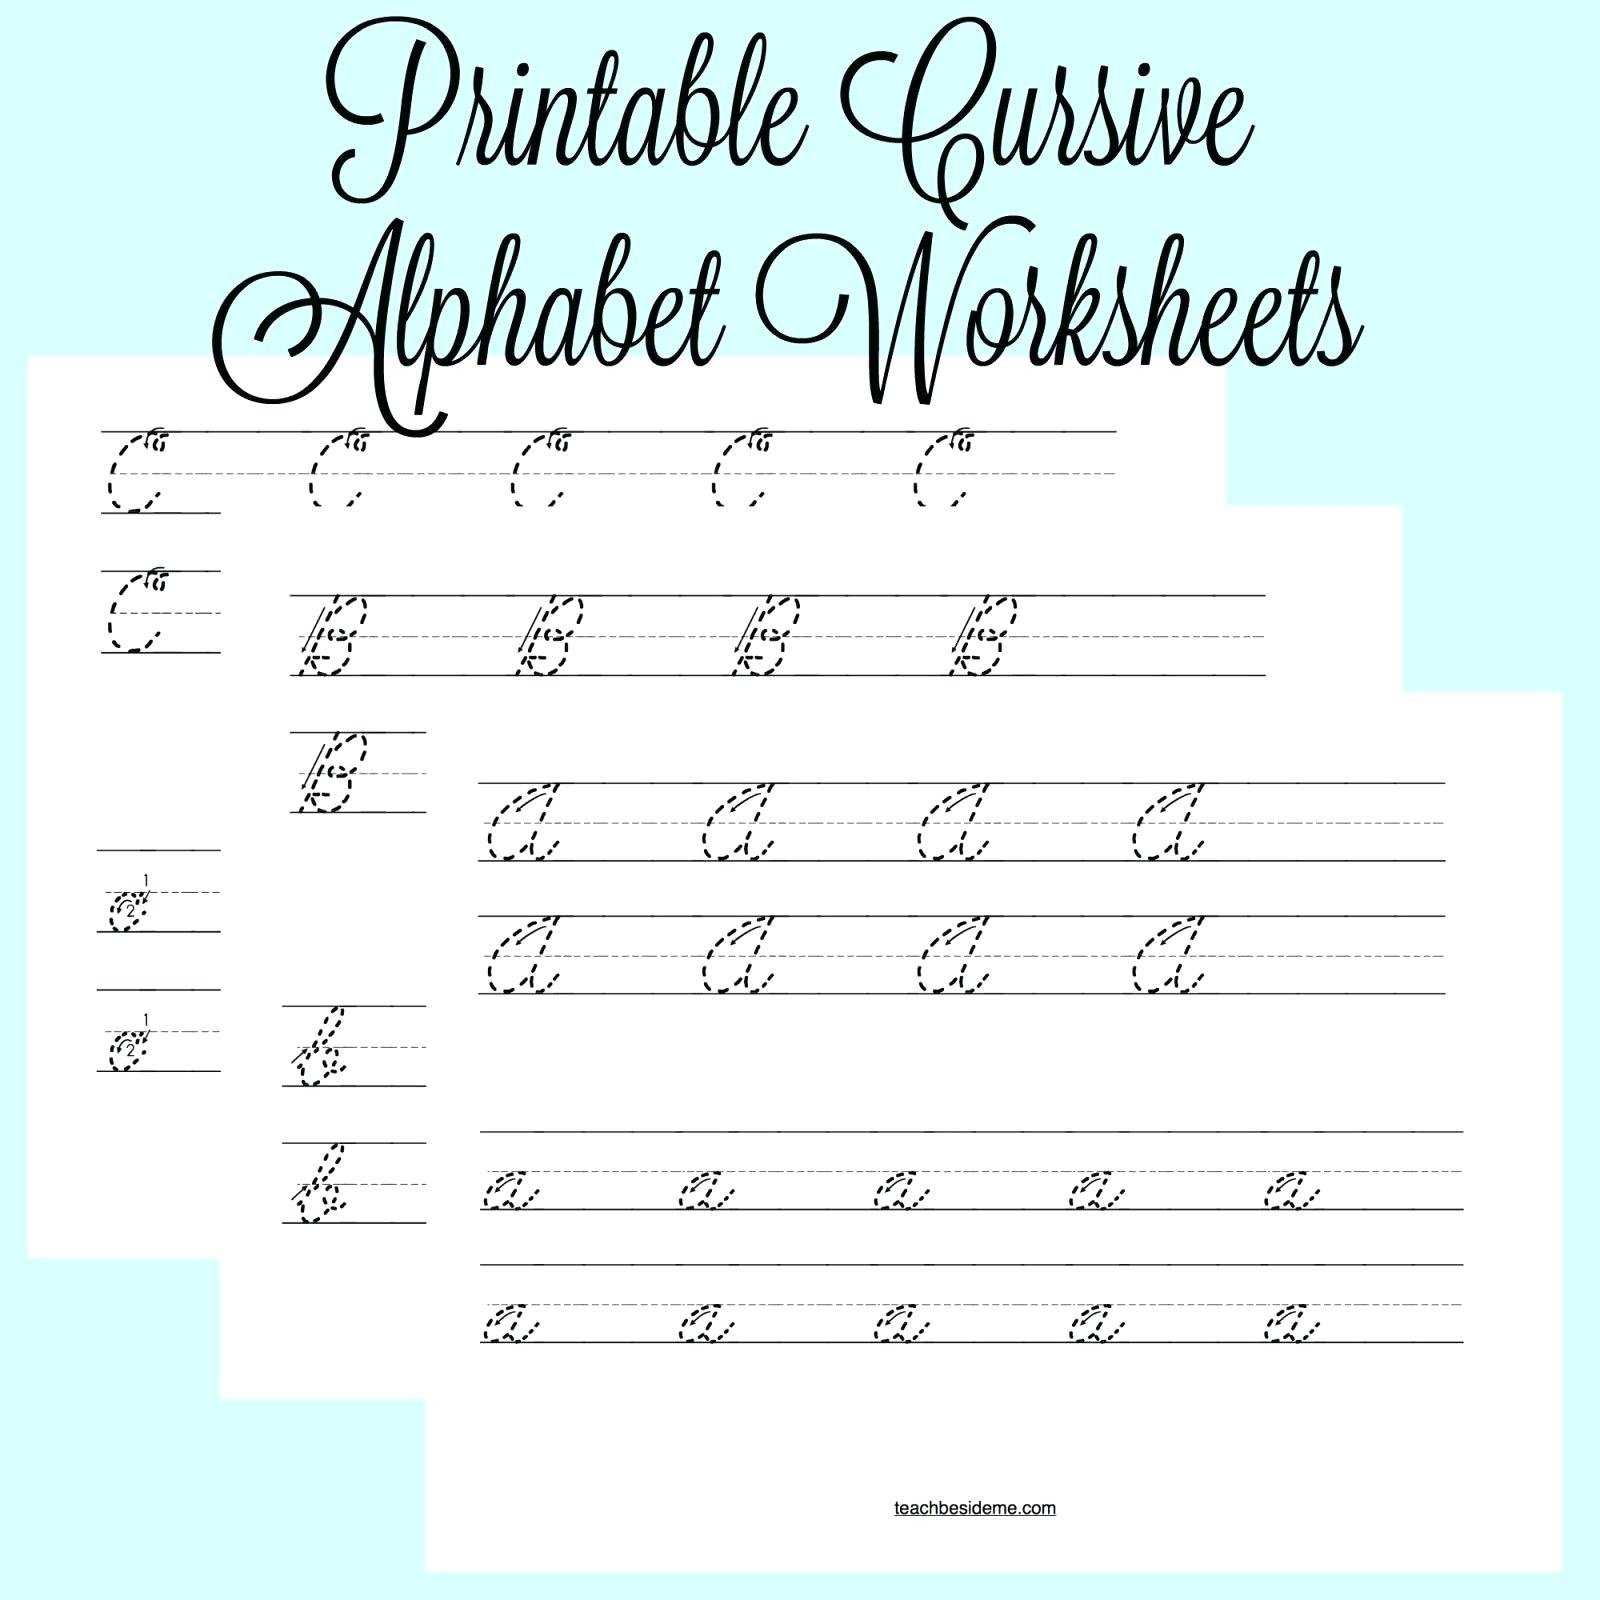 Cursive Handwriting Alphabet Also Cursive Writing Alphabet For Cursive Alphabet Worksheets Pdf